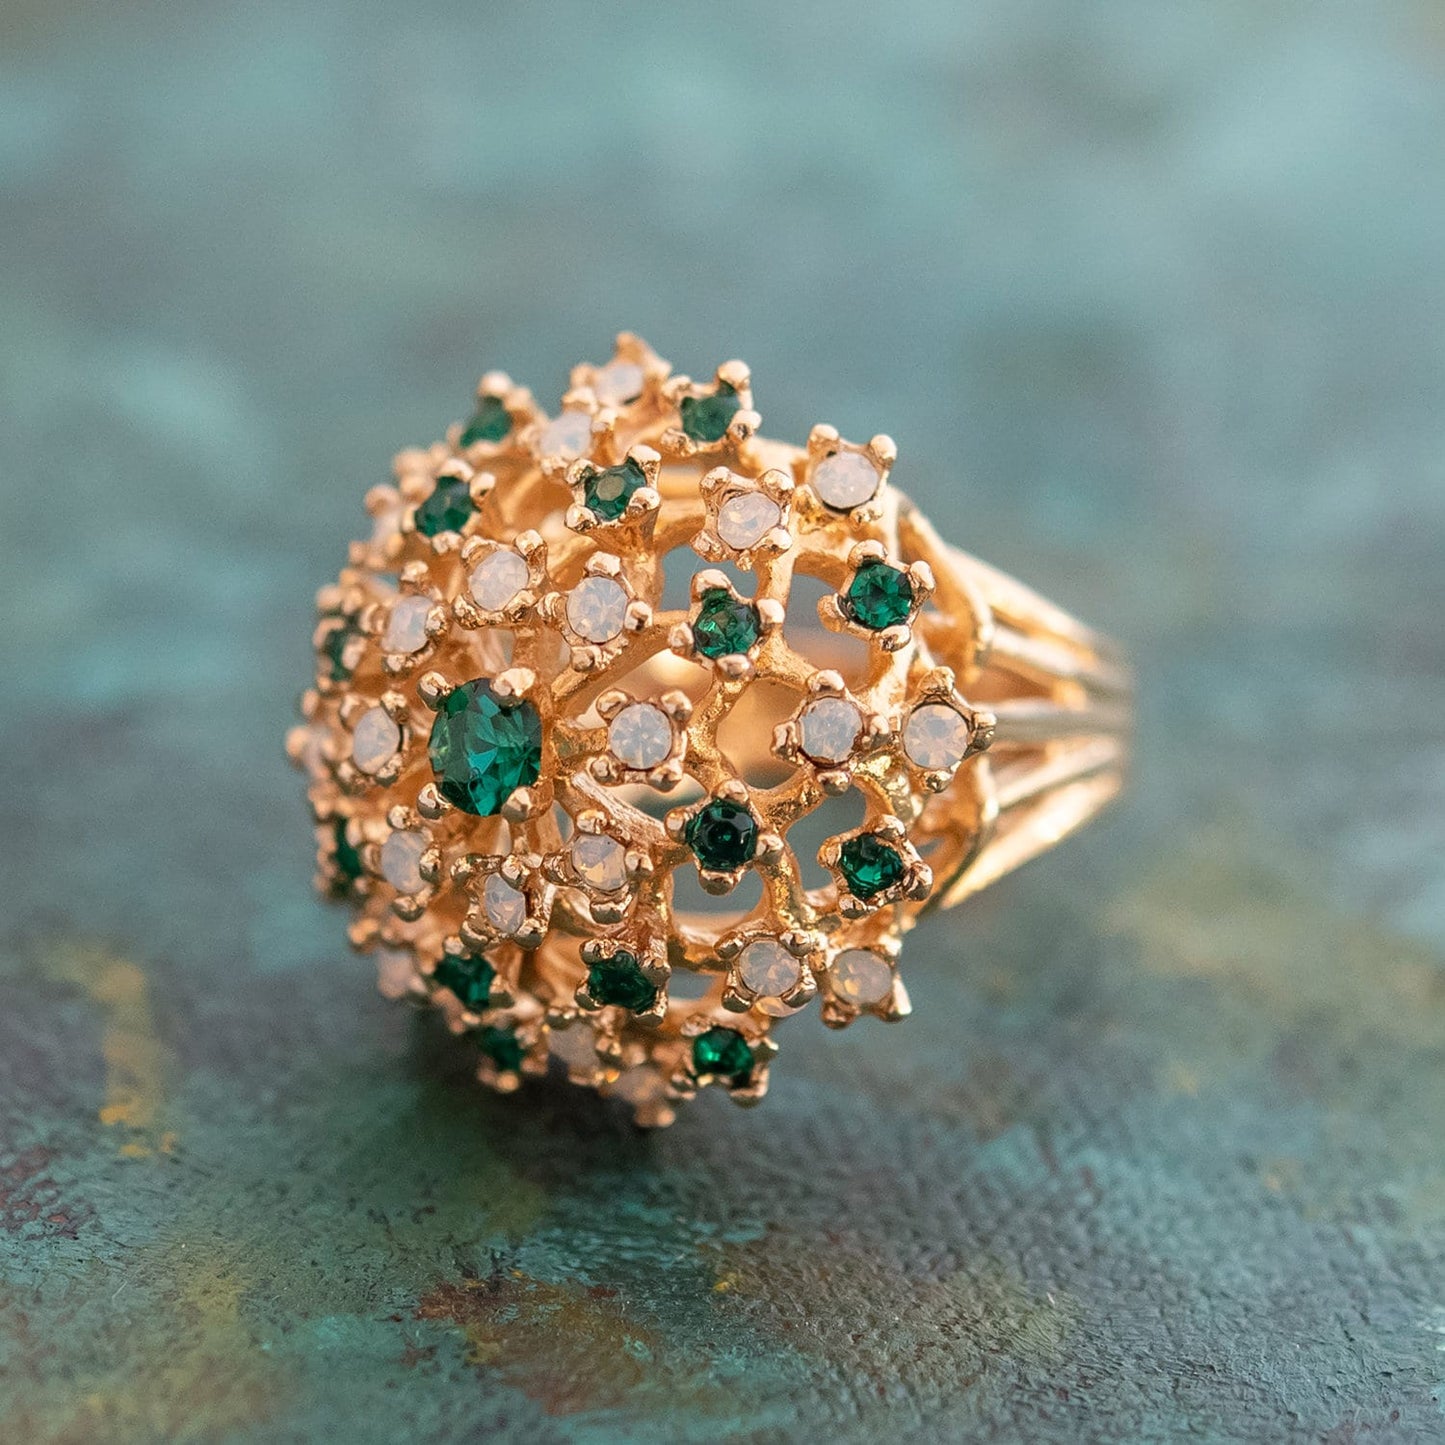 Vintage Ring Emerald Swarovski Crystal and Pinfire Opal Burst Ring 18k Gold  R195 - Limited Stock - Never Worn